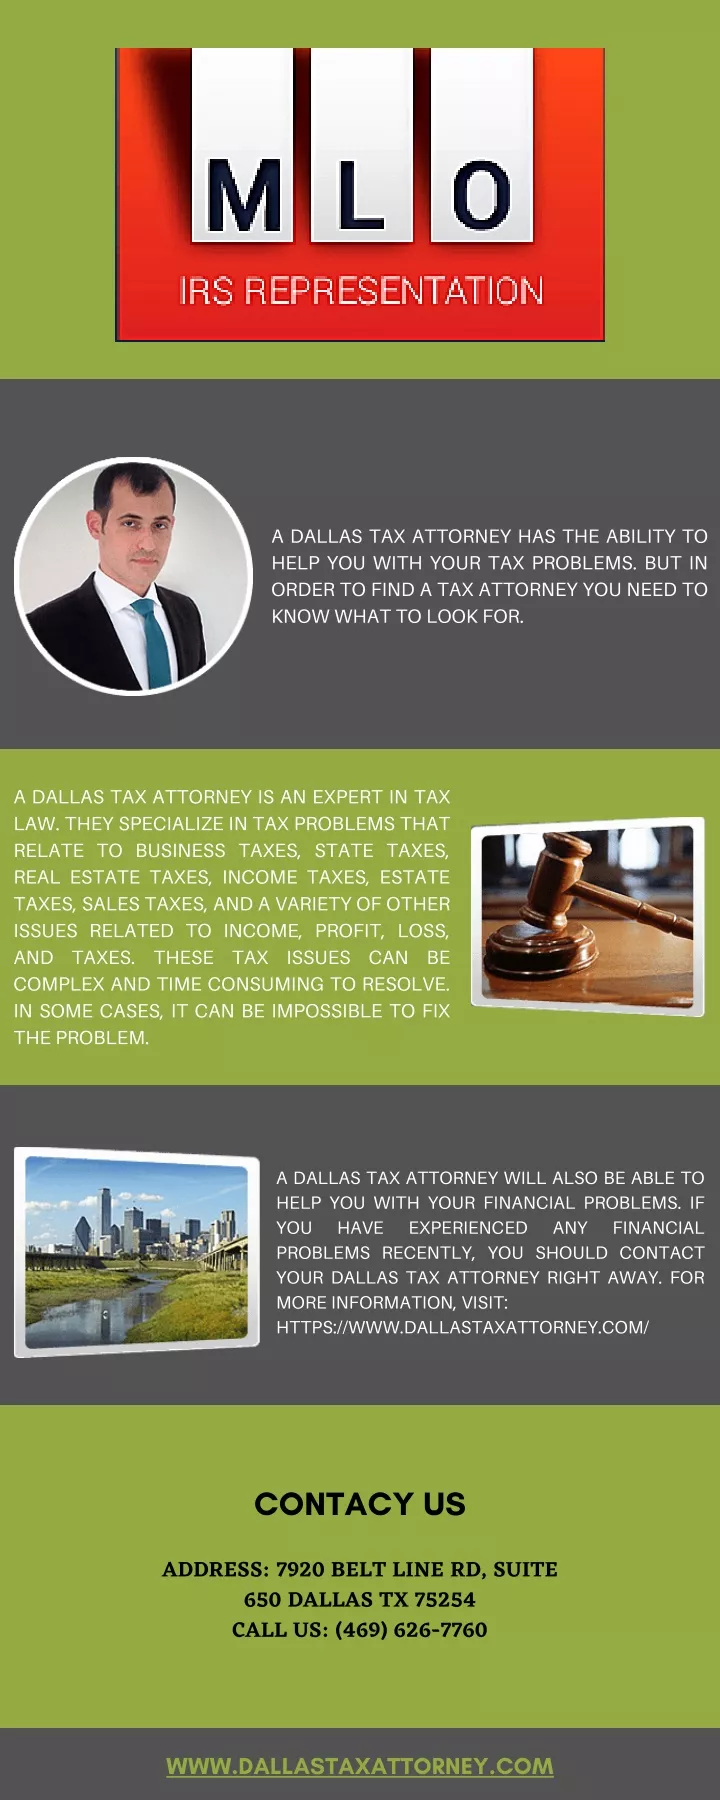 a dallas tax attorney has the ability to